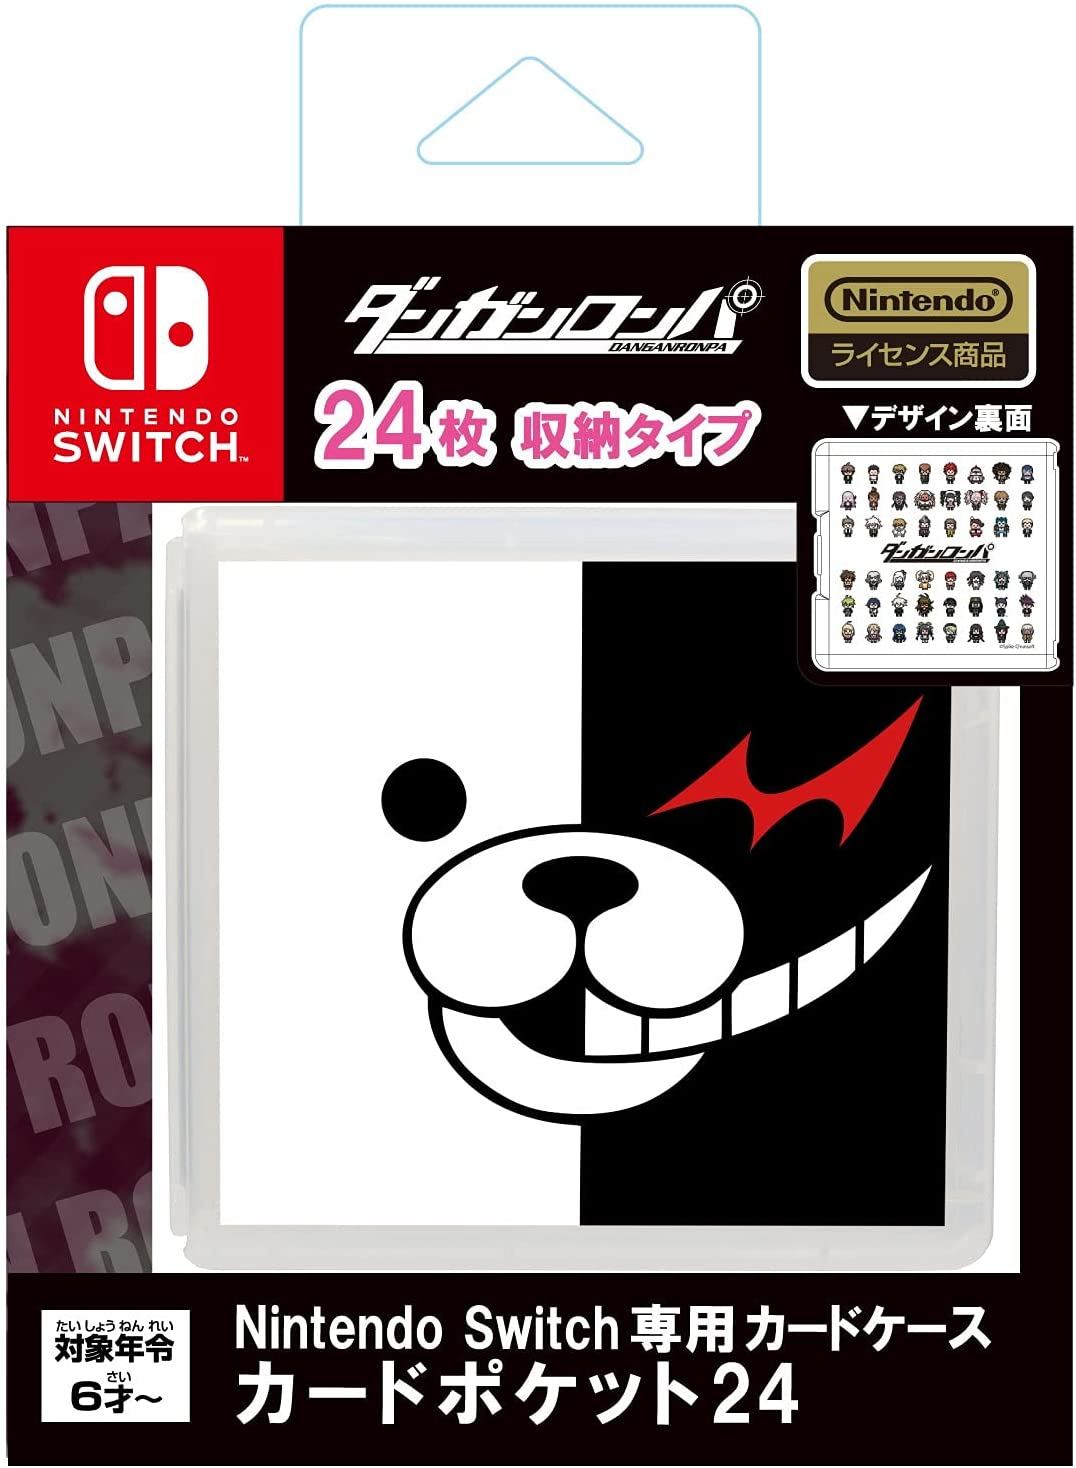 Nintendo Switch Card Pocket 24 (Draganronpa) for Nintendo Switch